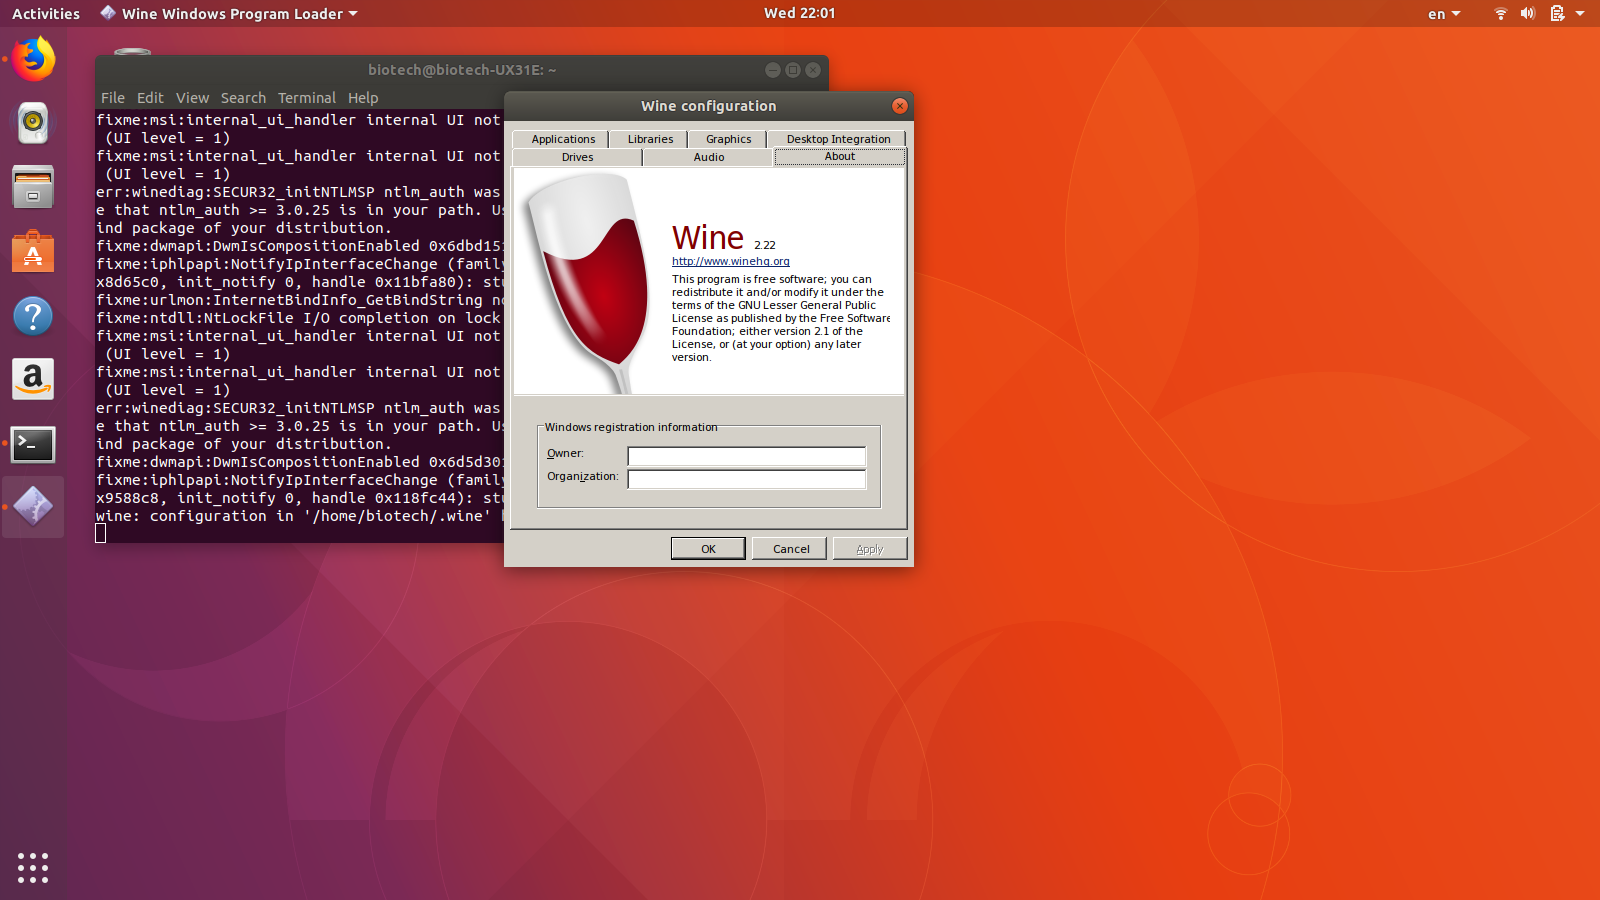 How to install program on Ubuntu: How to install Wine 25.2525